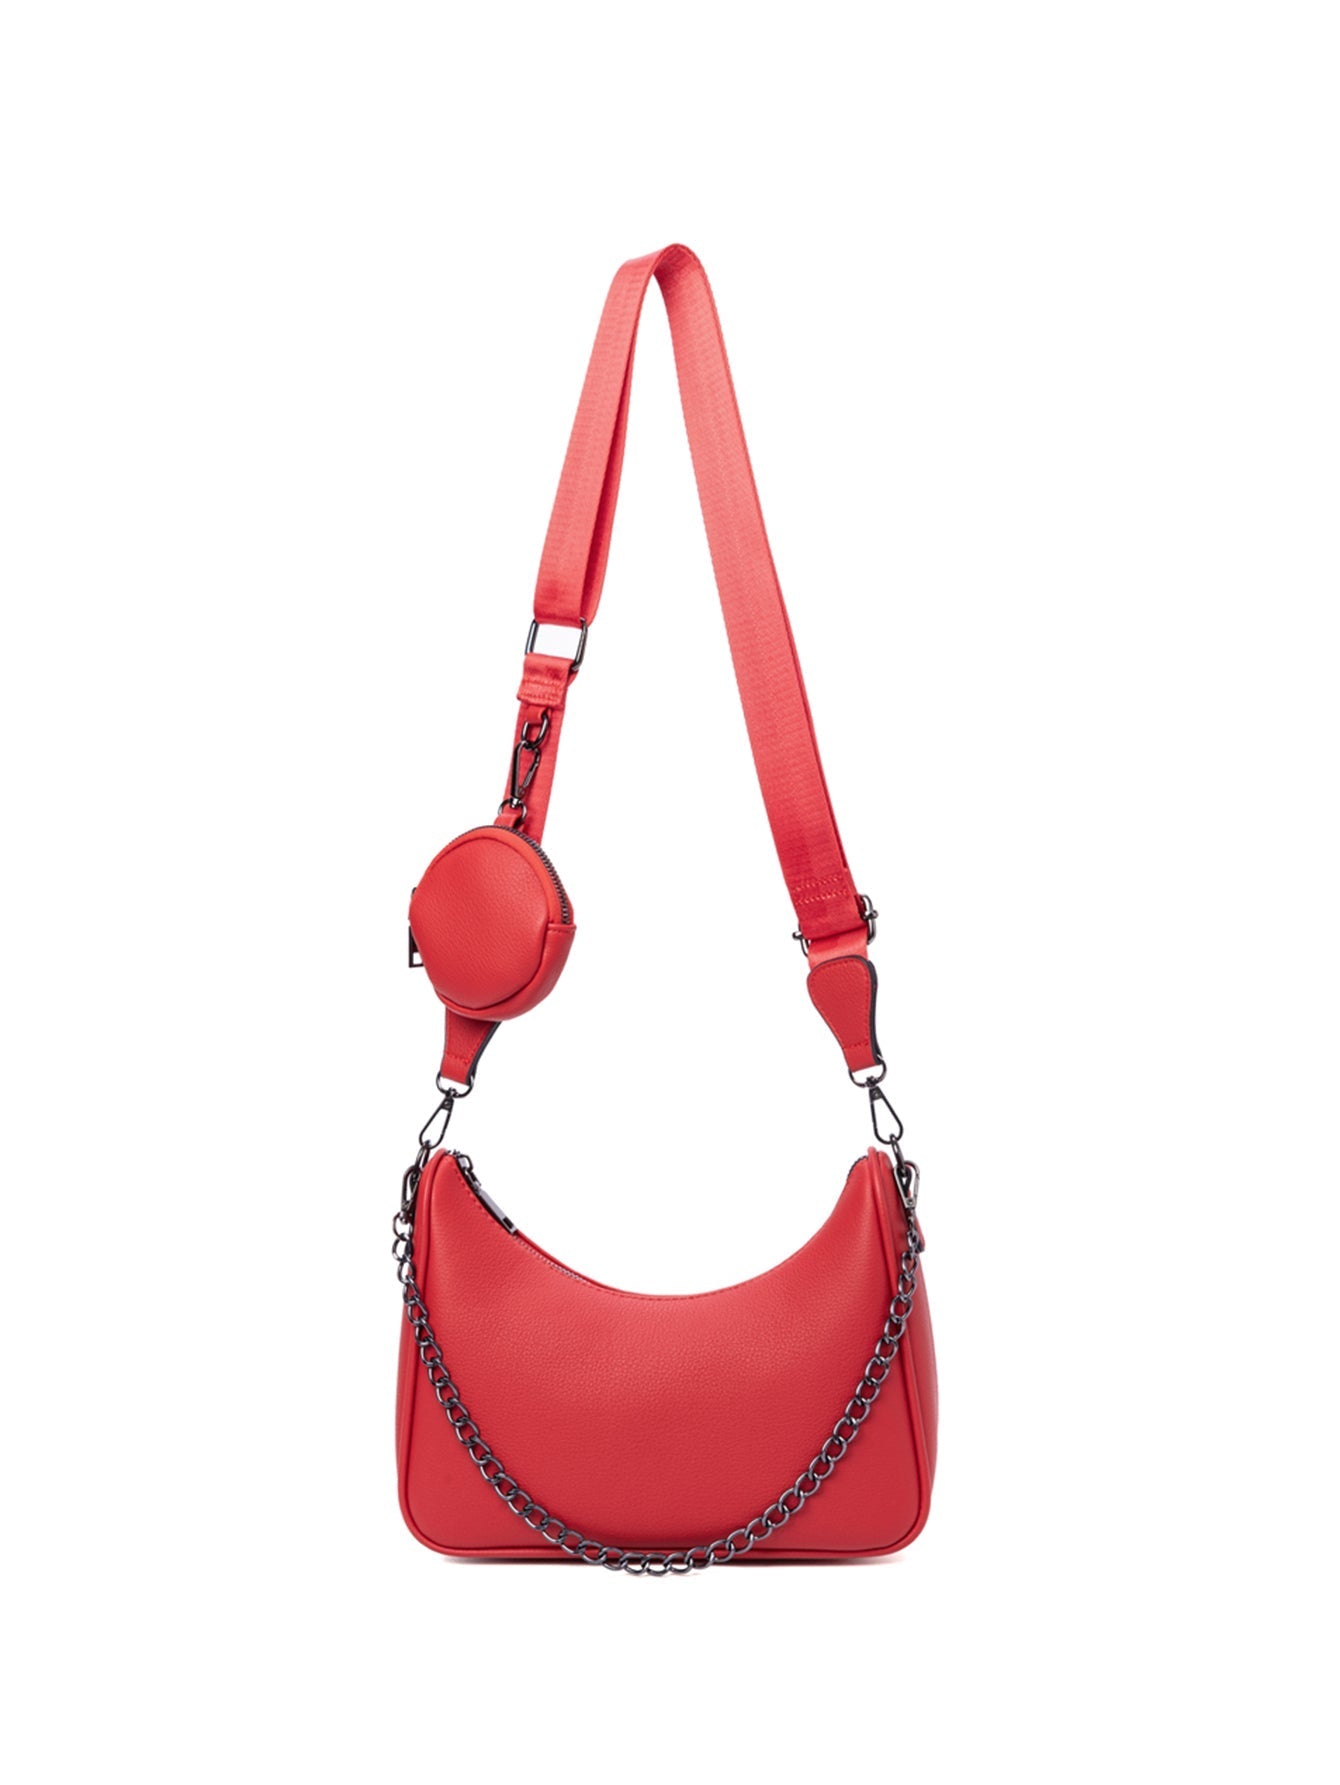 Small Crossbody Hobo Handbags for Women, Multipurpose Soft Shoulder Bag Lightweight Retro Tote Bag with Coin Purse 2pcs/set Sai Feel